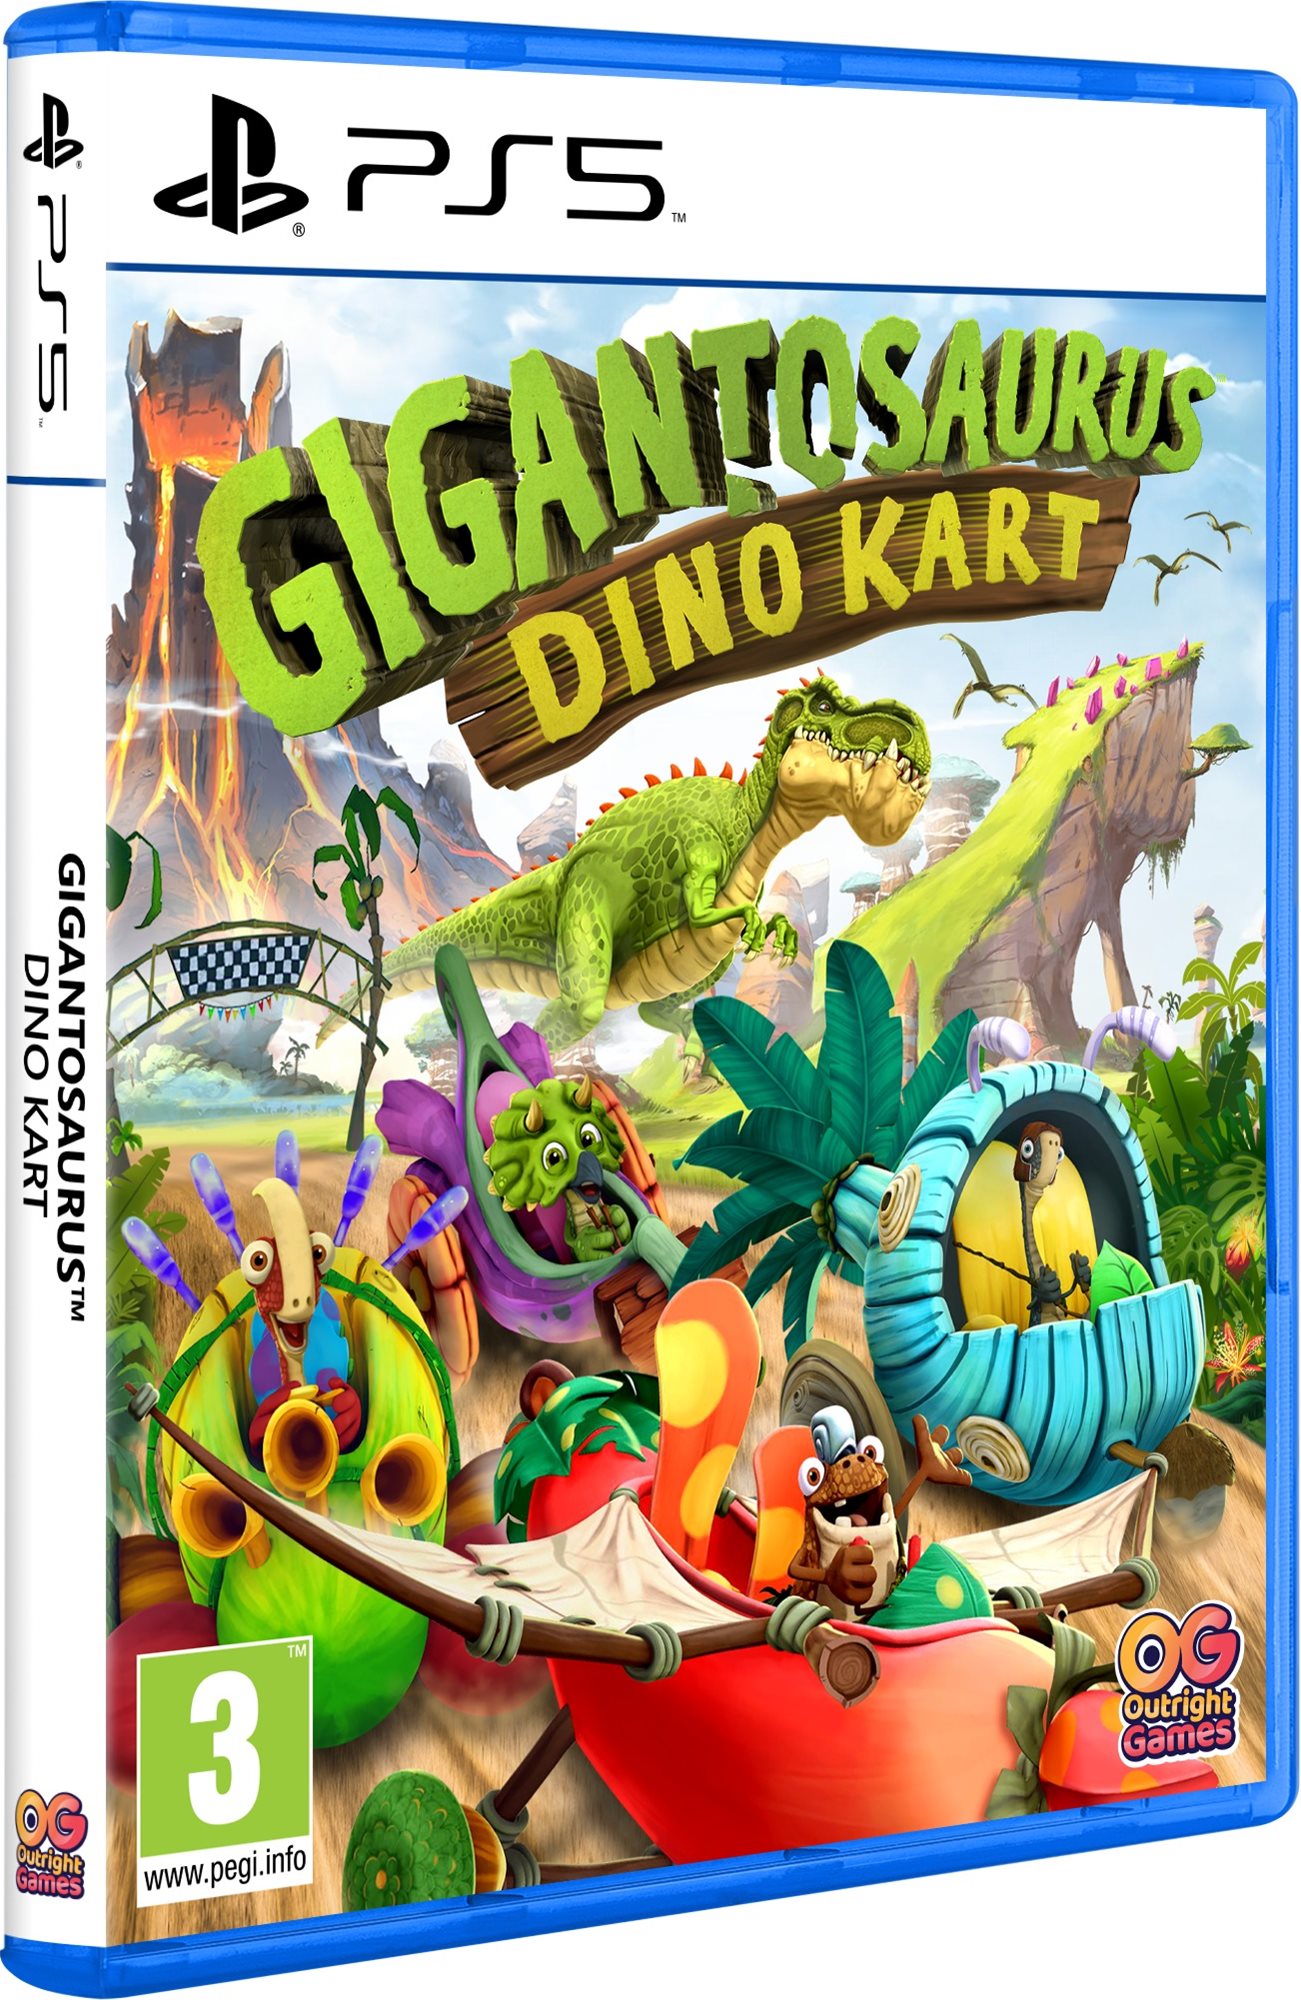 Gigantosaurus: Dino Kart - PS5